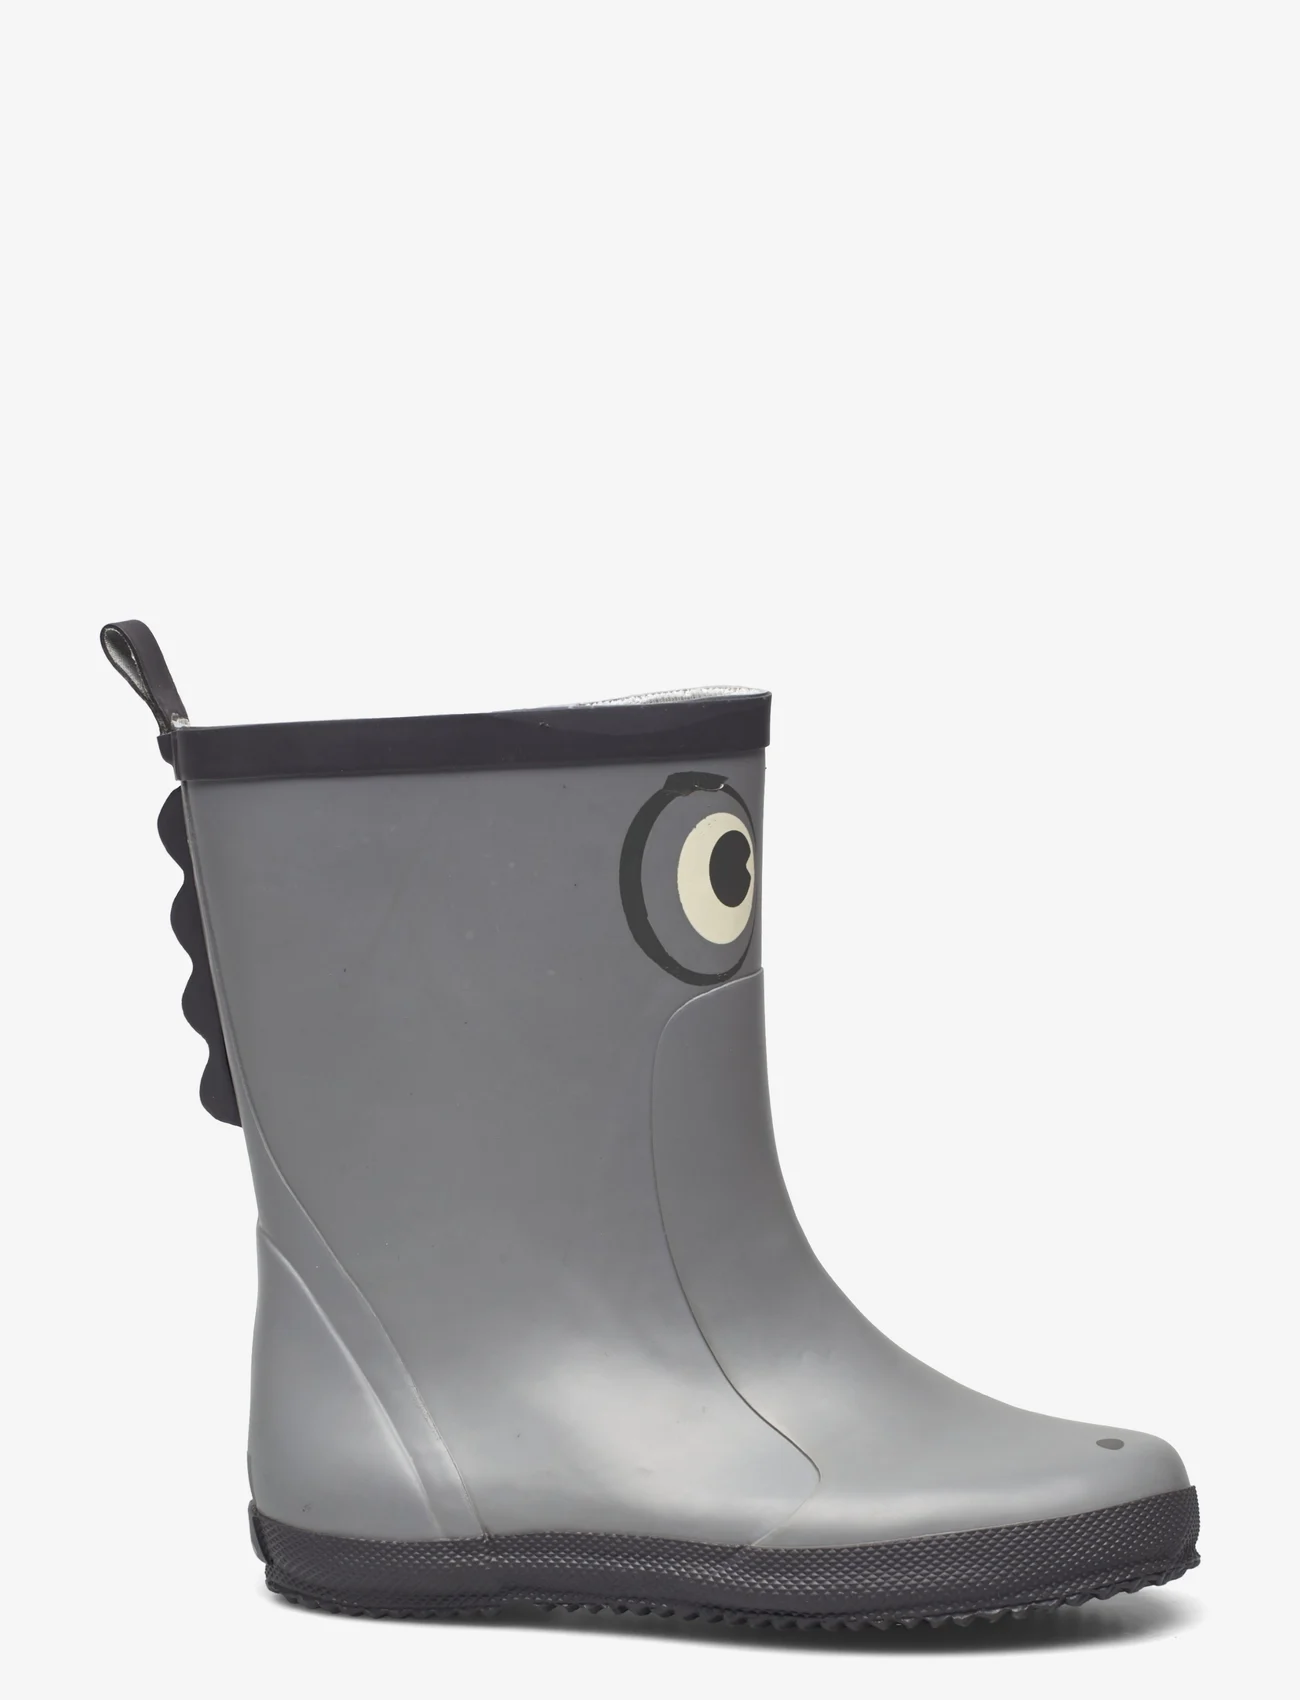 CeLaVi - Wellies - Front Print - gummistøvler uden for - frost gray - 1